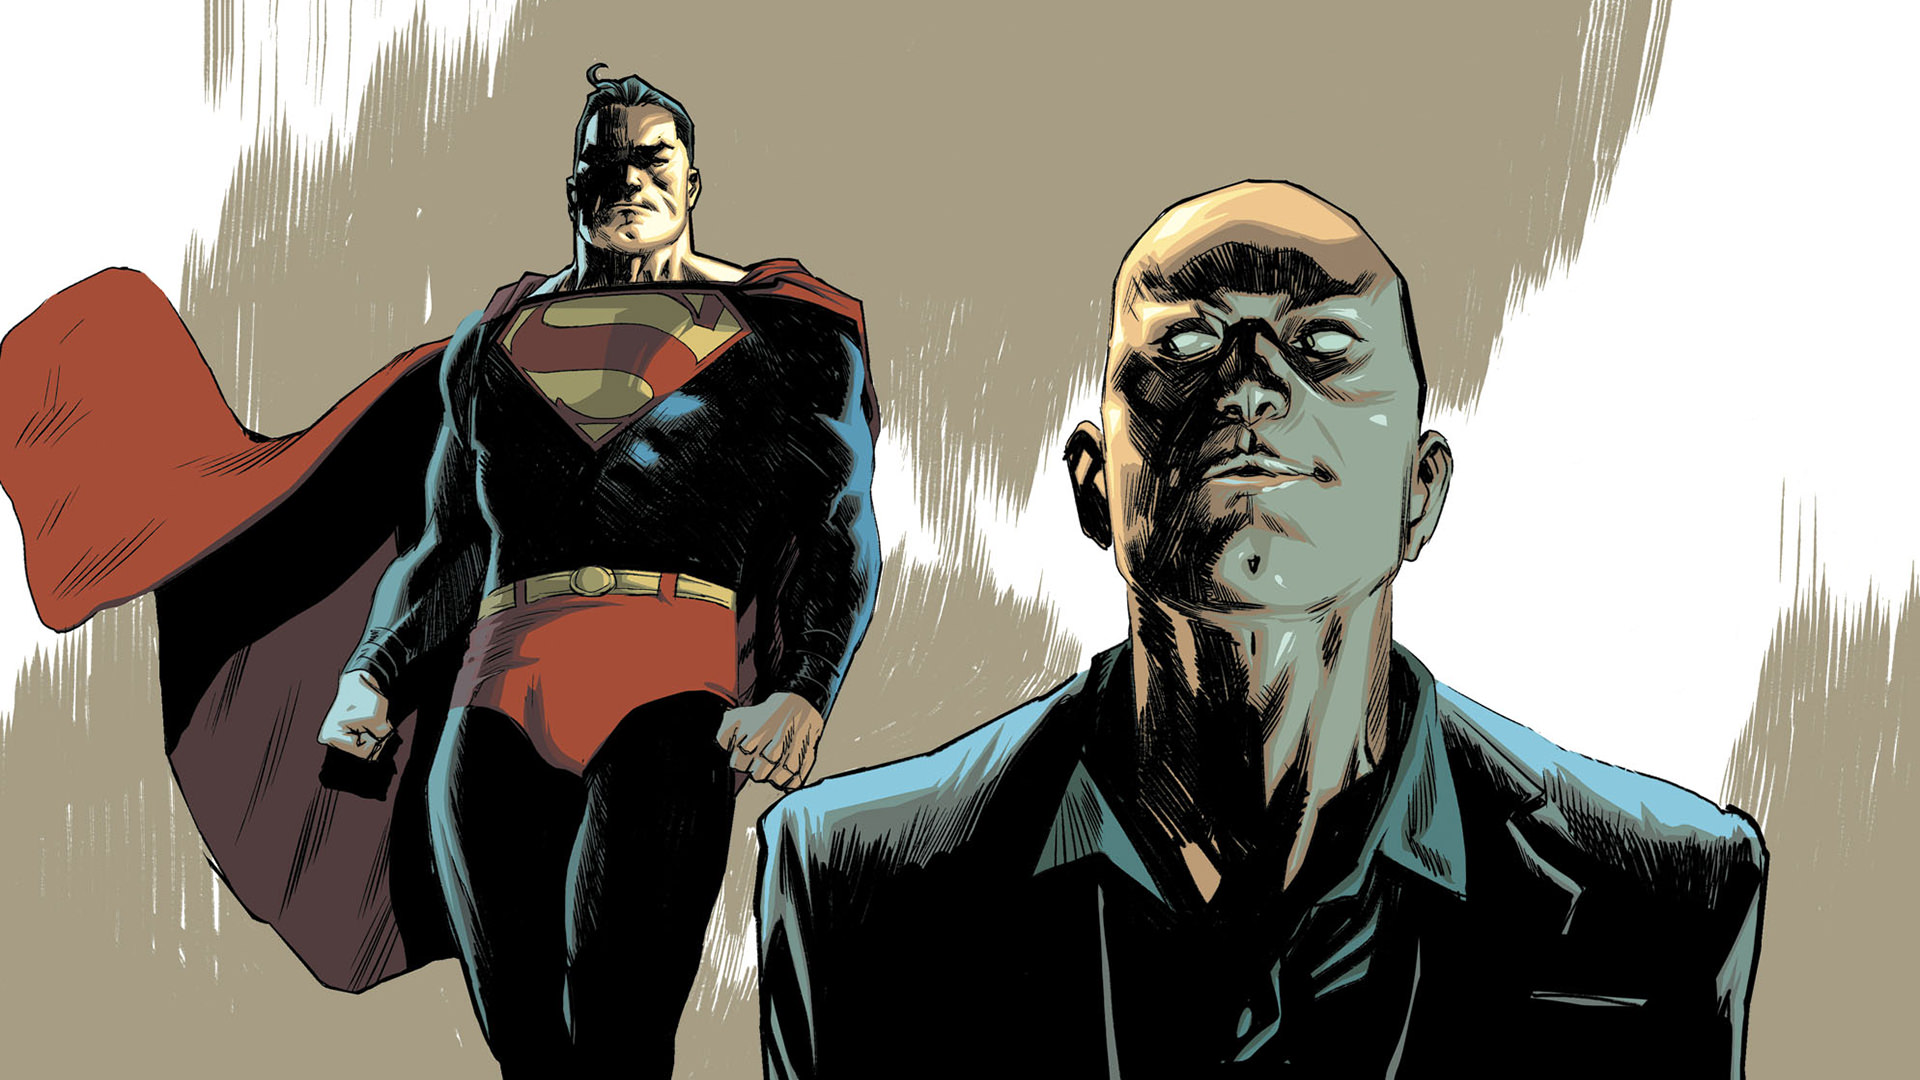 Descarga gratuita de fondo de pantalla para móvil de Superhombre, Historietas, Dc Comics, Lex Luthor.